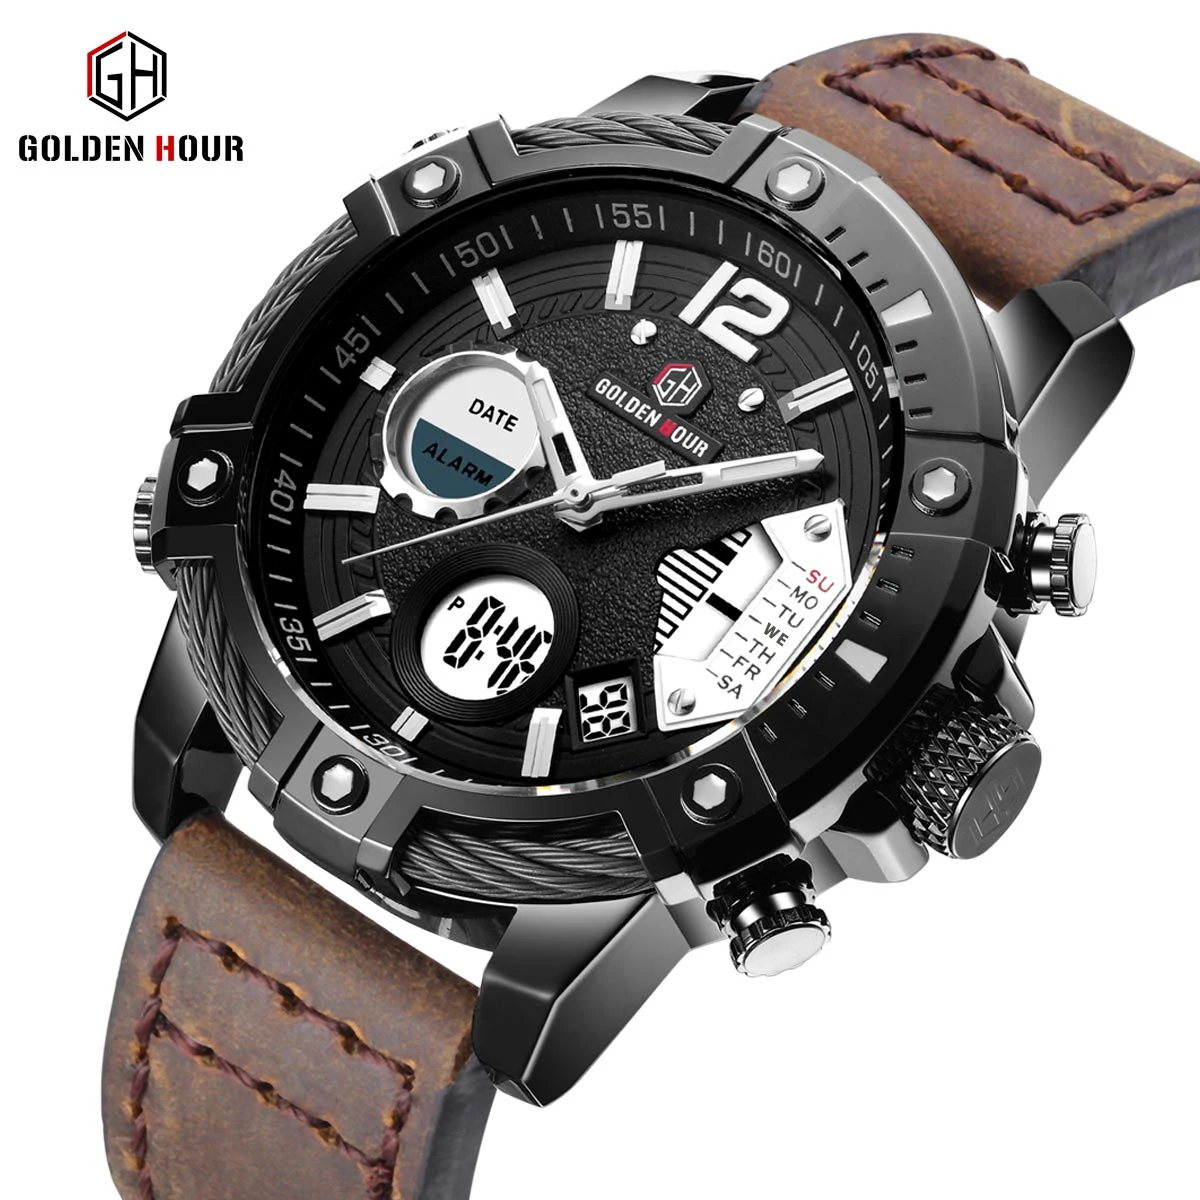 

GOLDENHOUR Luxury Brand Analog Digital Wrist Watch LED Gent Orologi Water Resistant Sport Military Watches Men Quartz Watches